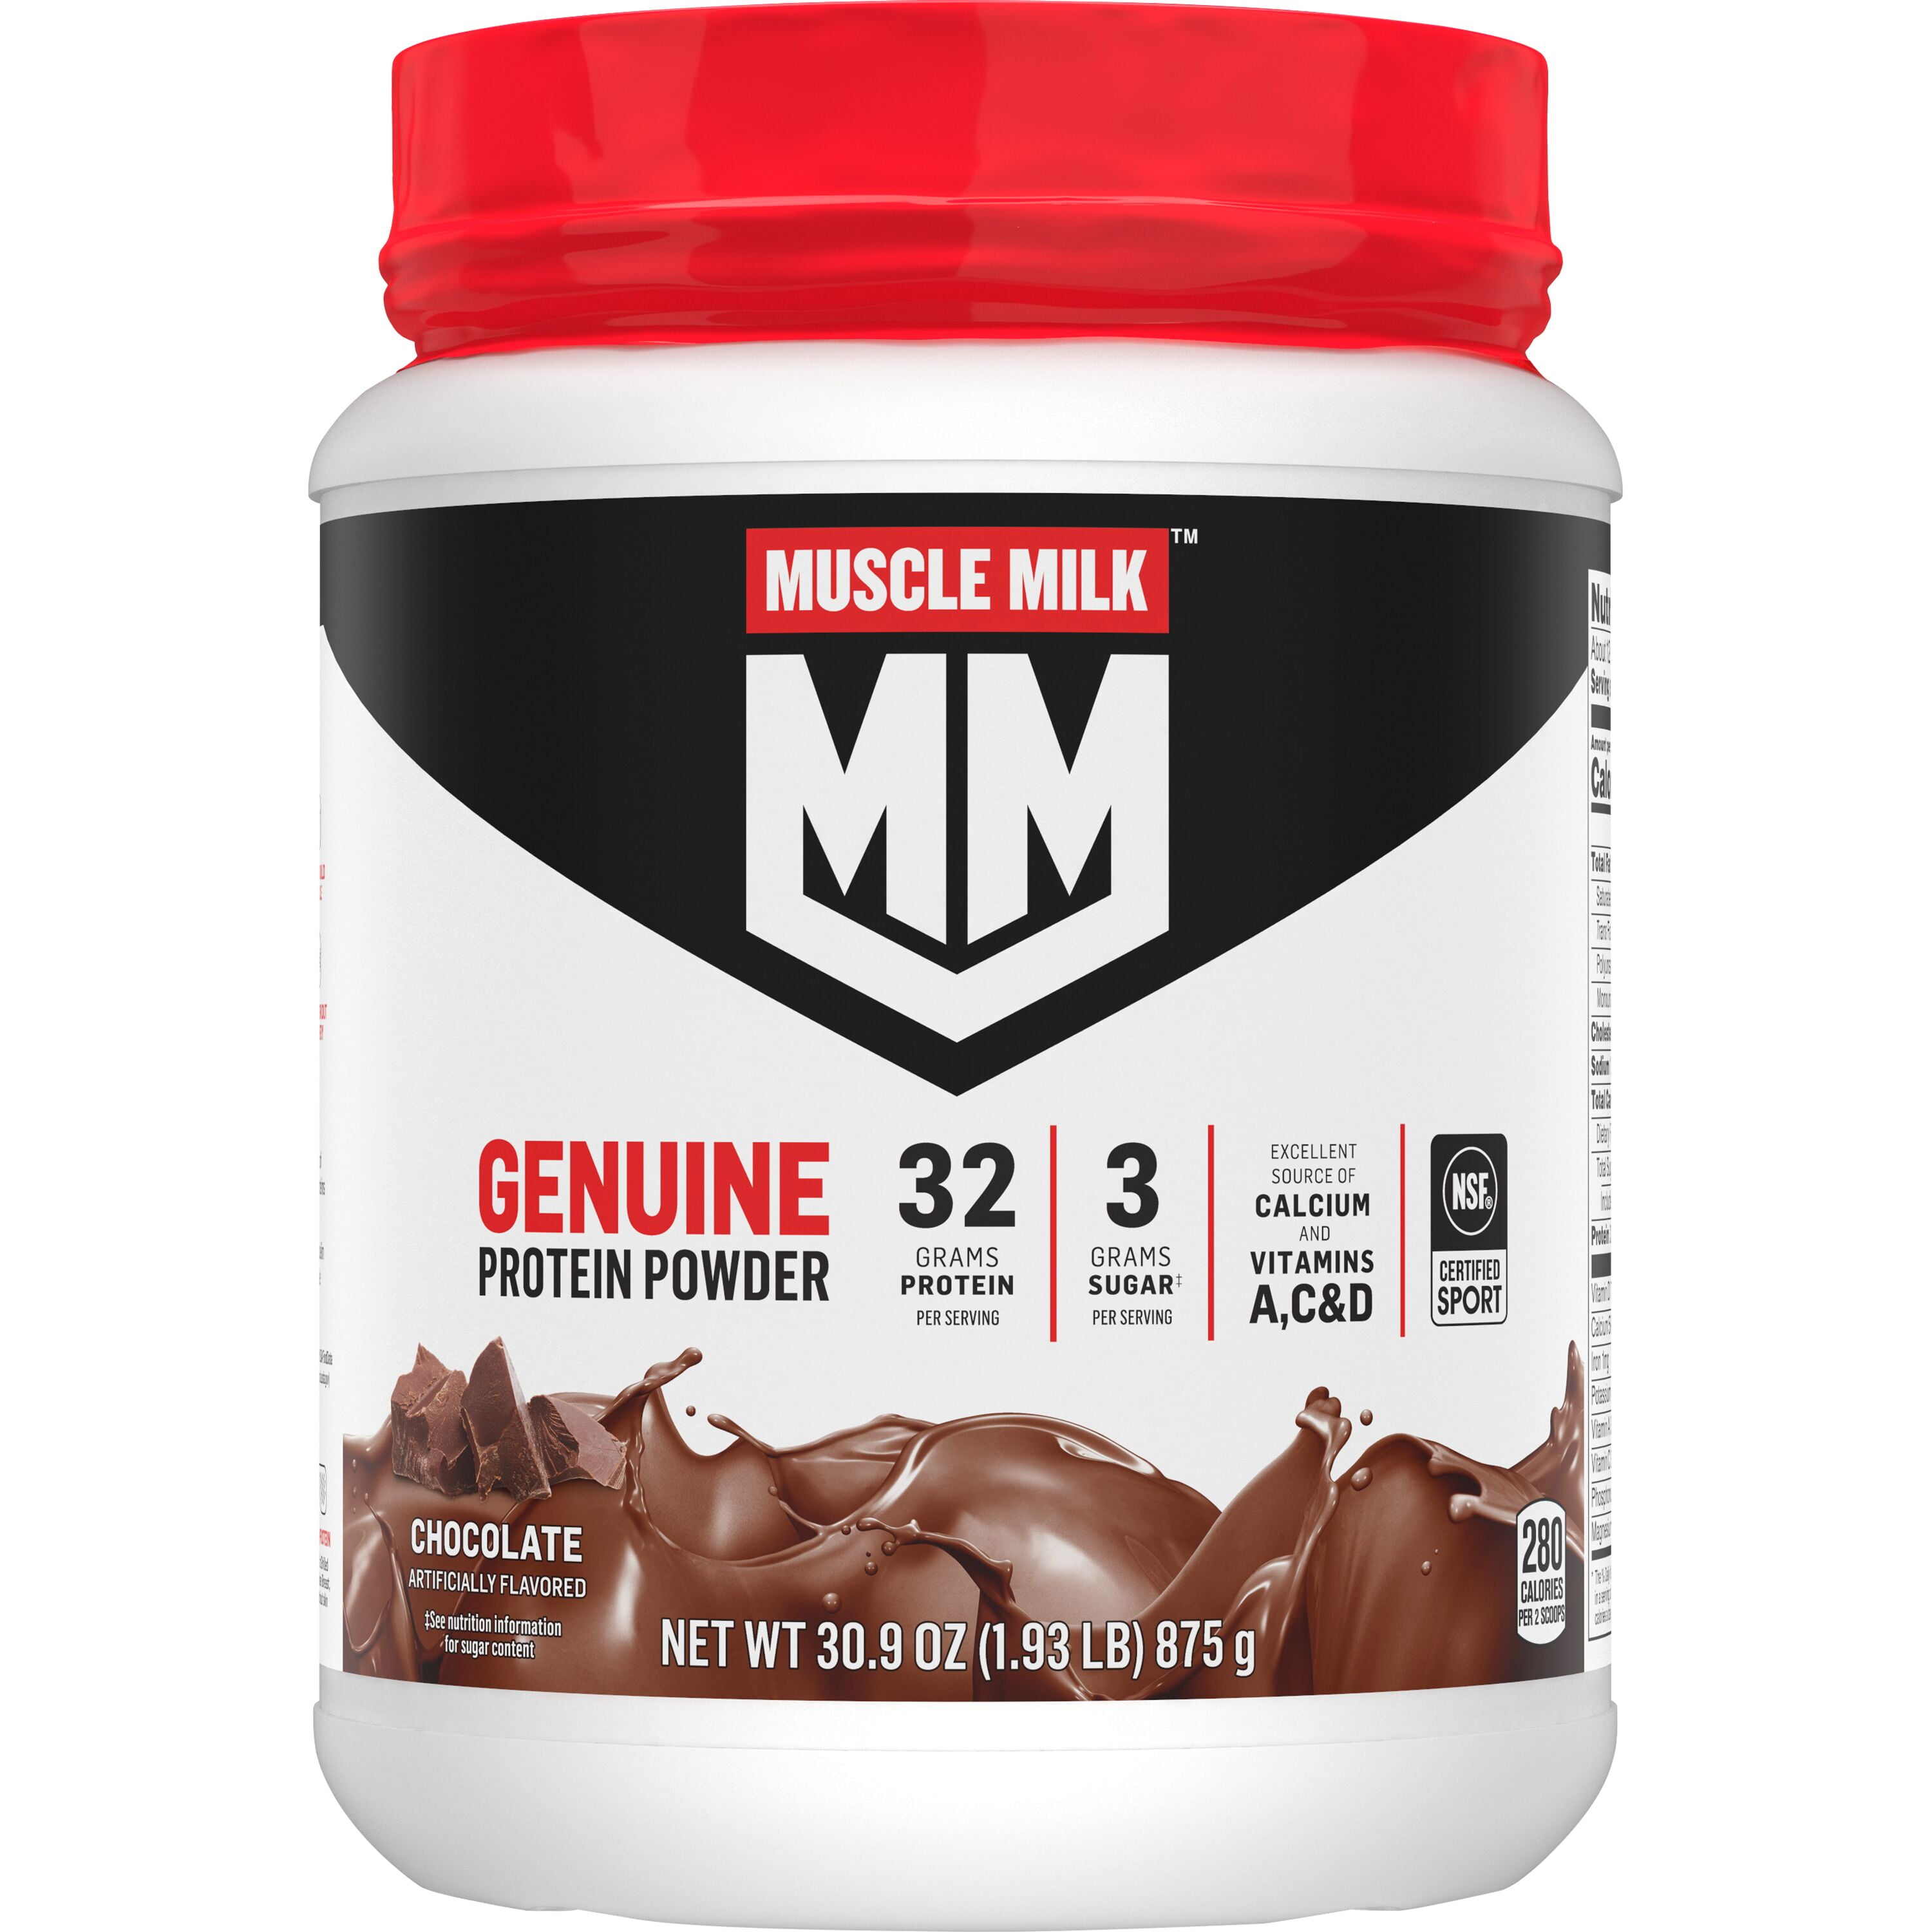 Muscle Milk Genuine Protein Powder, Chocolate, 1.93 Pound, 12 Servings, 32g Protein